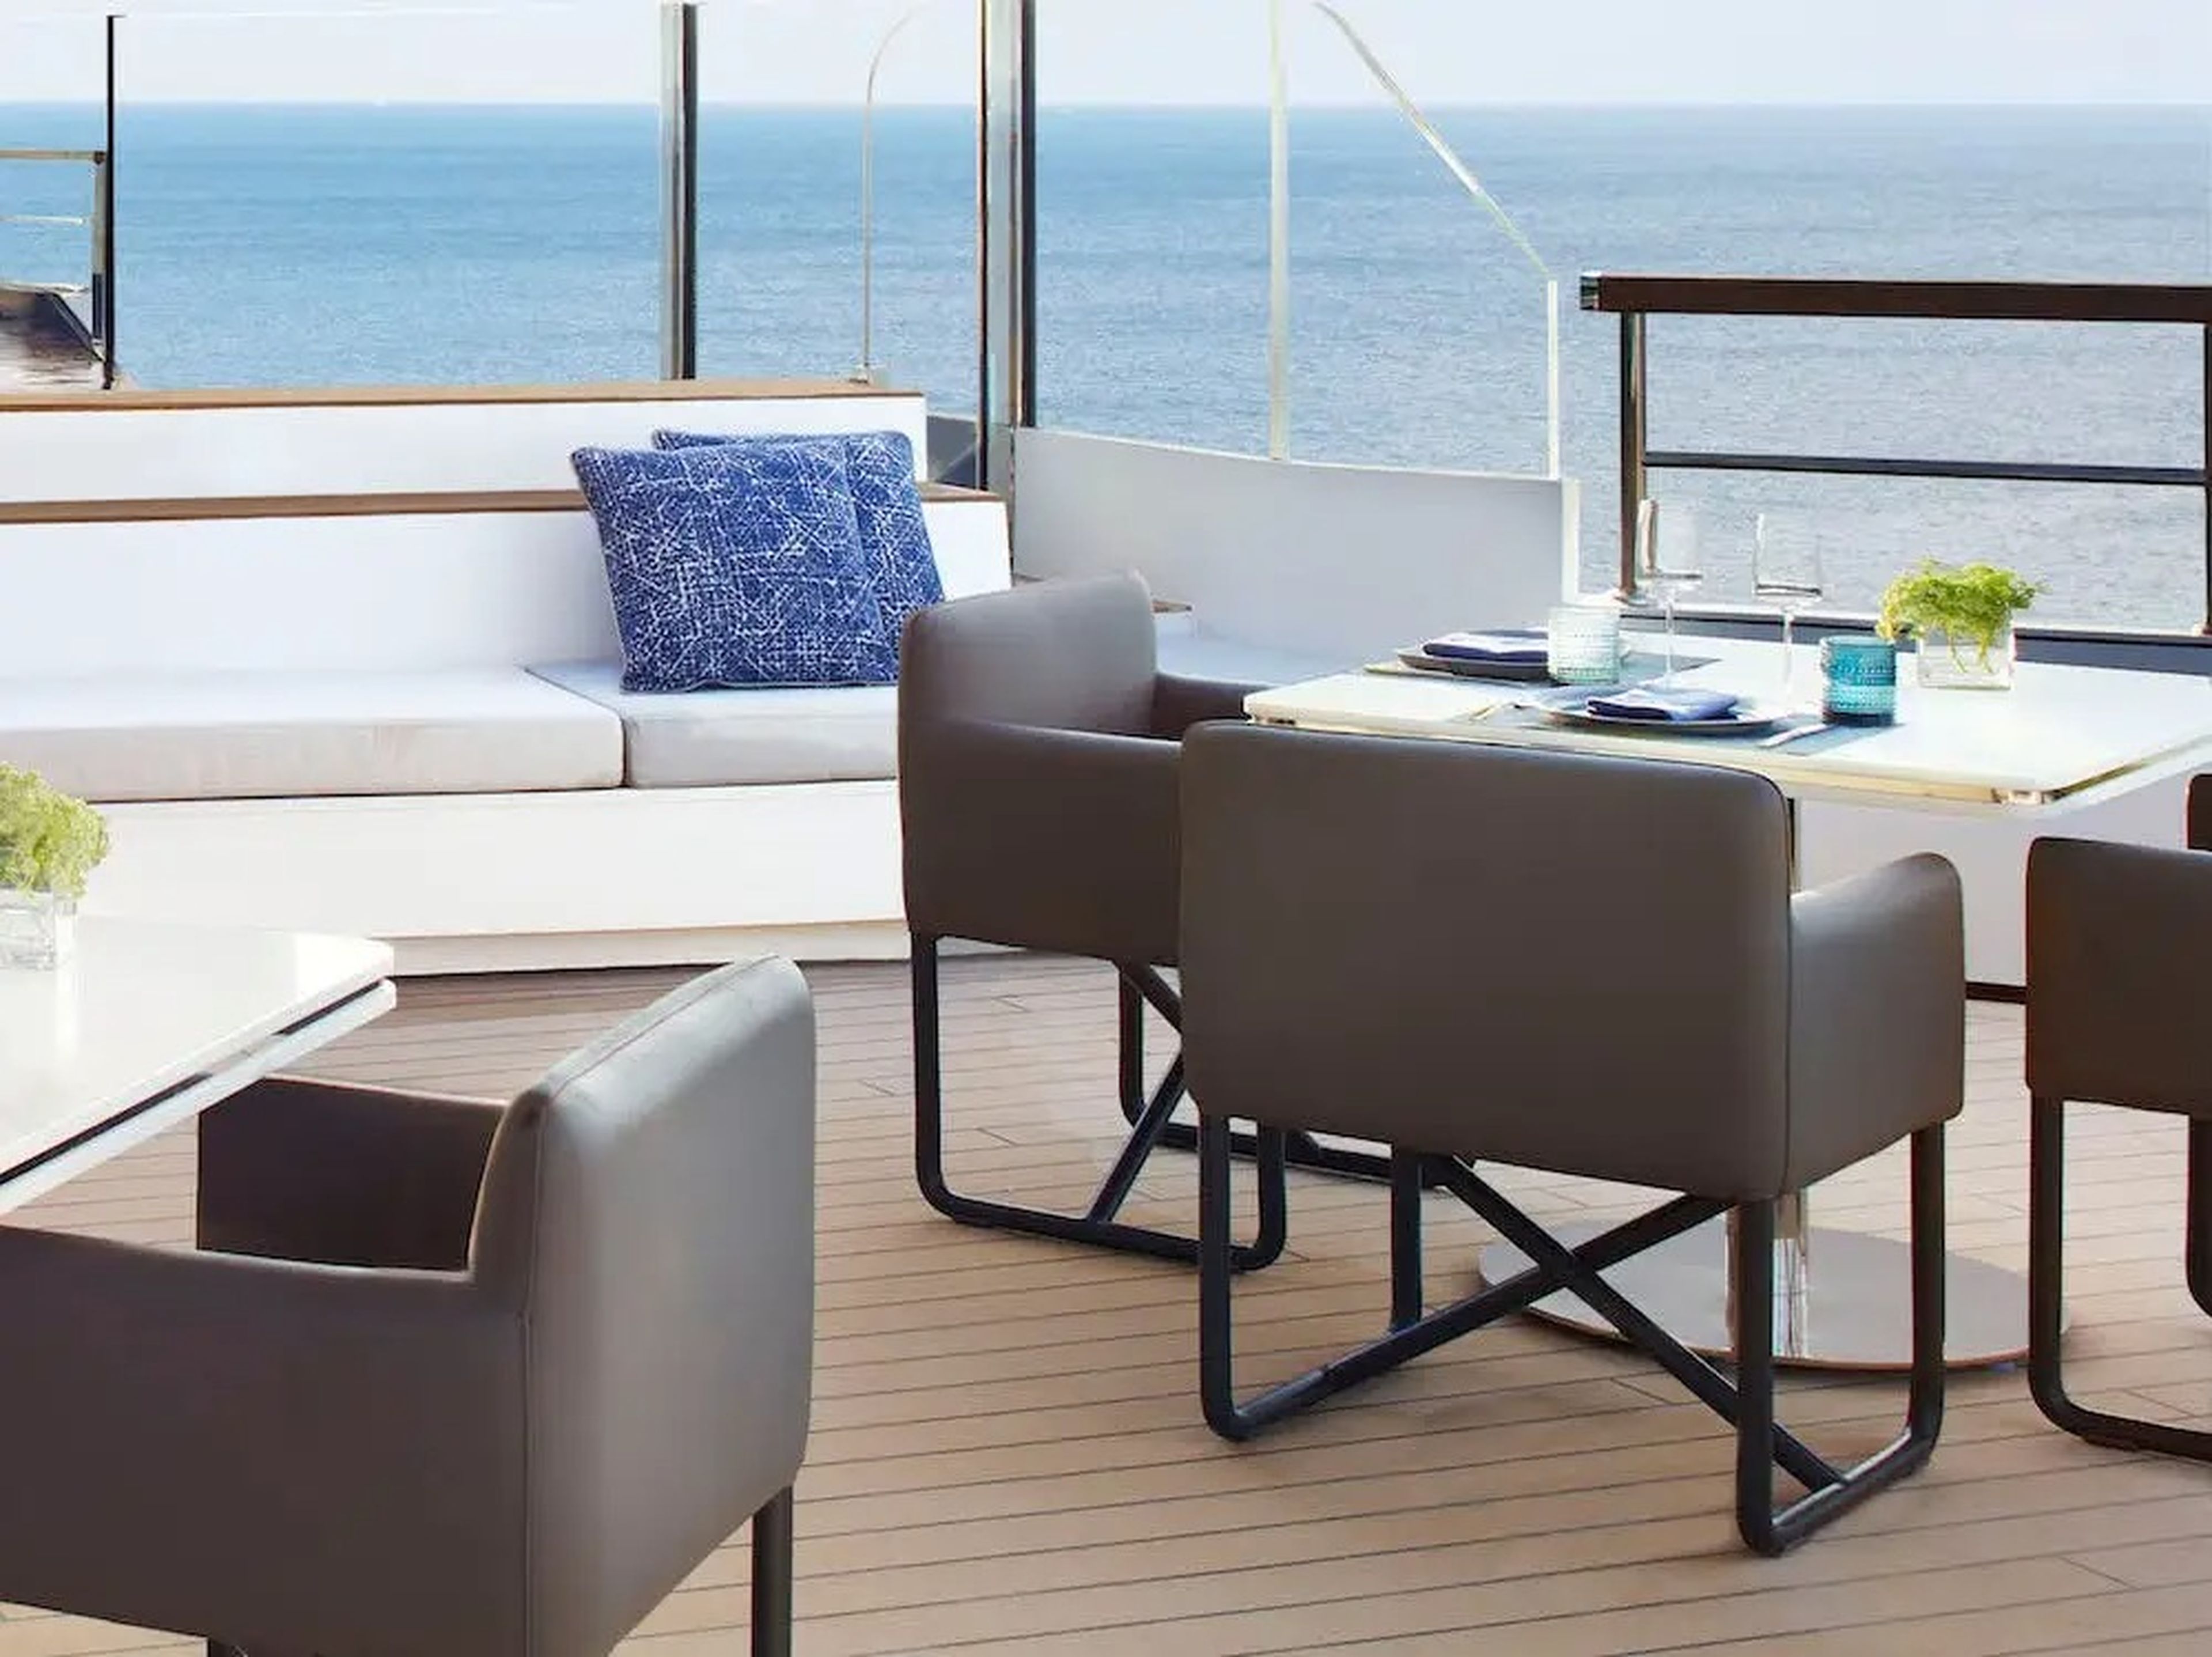 The Ritz-Carlton Yacht Collection's Evrima